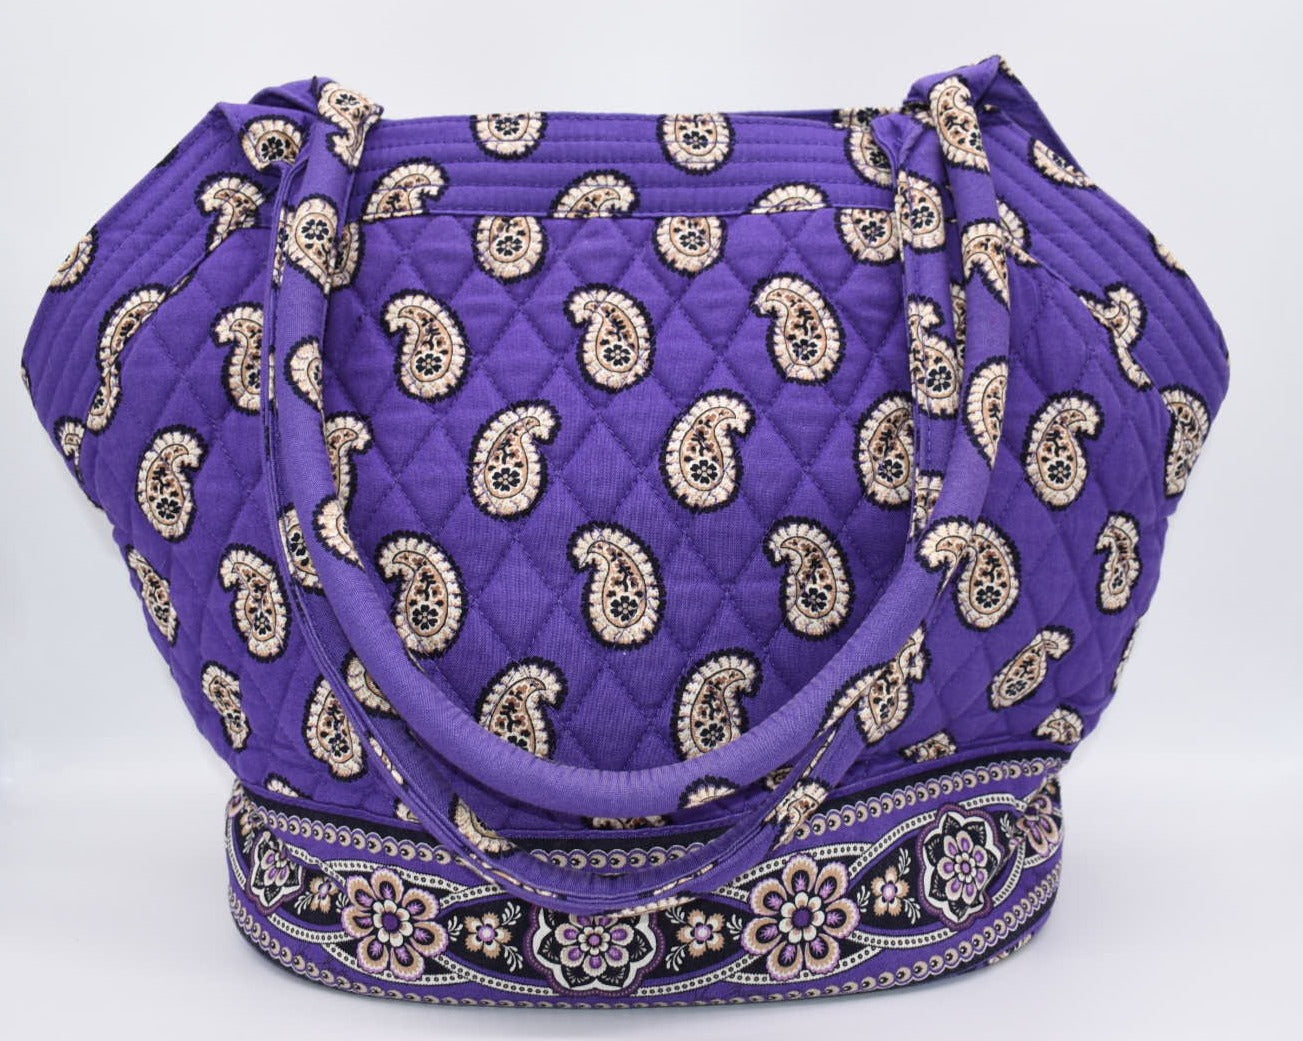 Vera Bradley Angle Tote Bag in "Simply Violet" Pattern